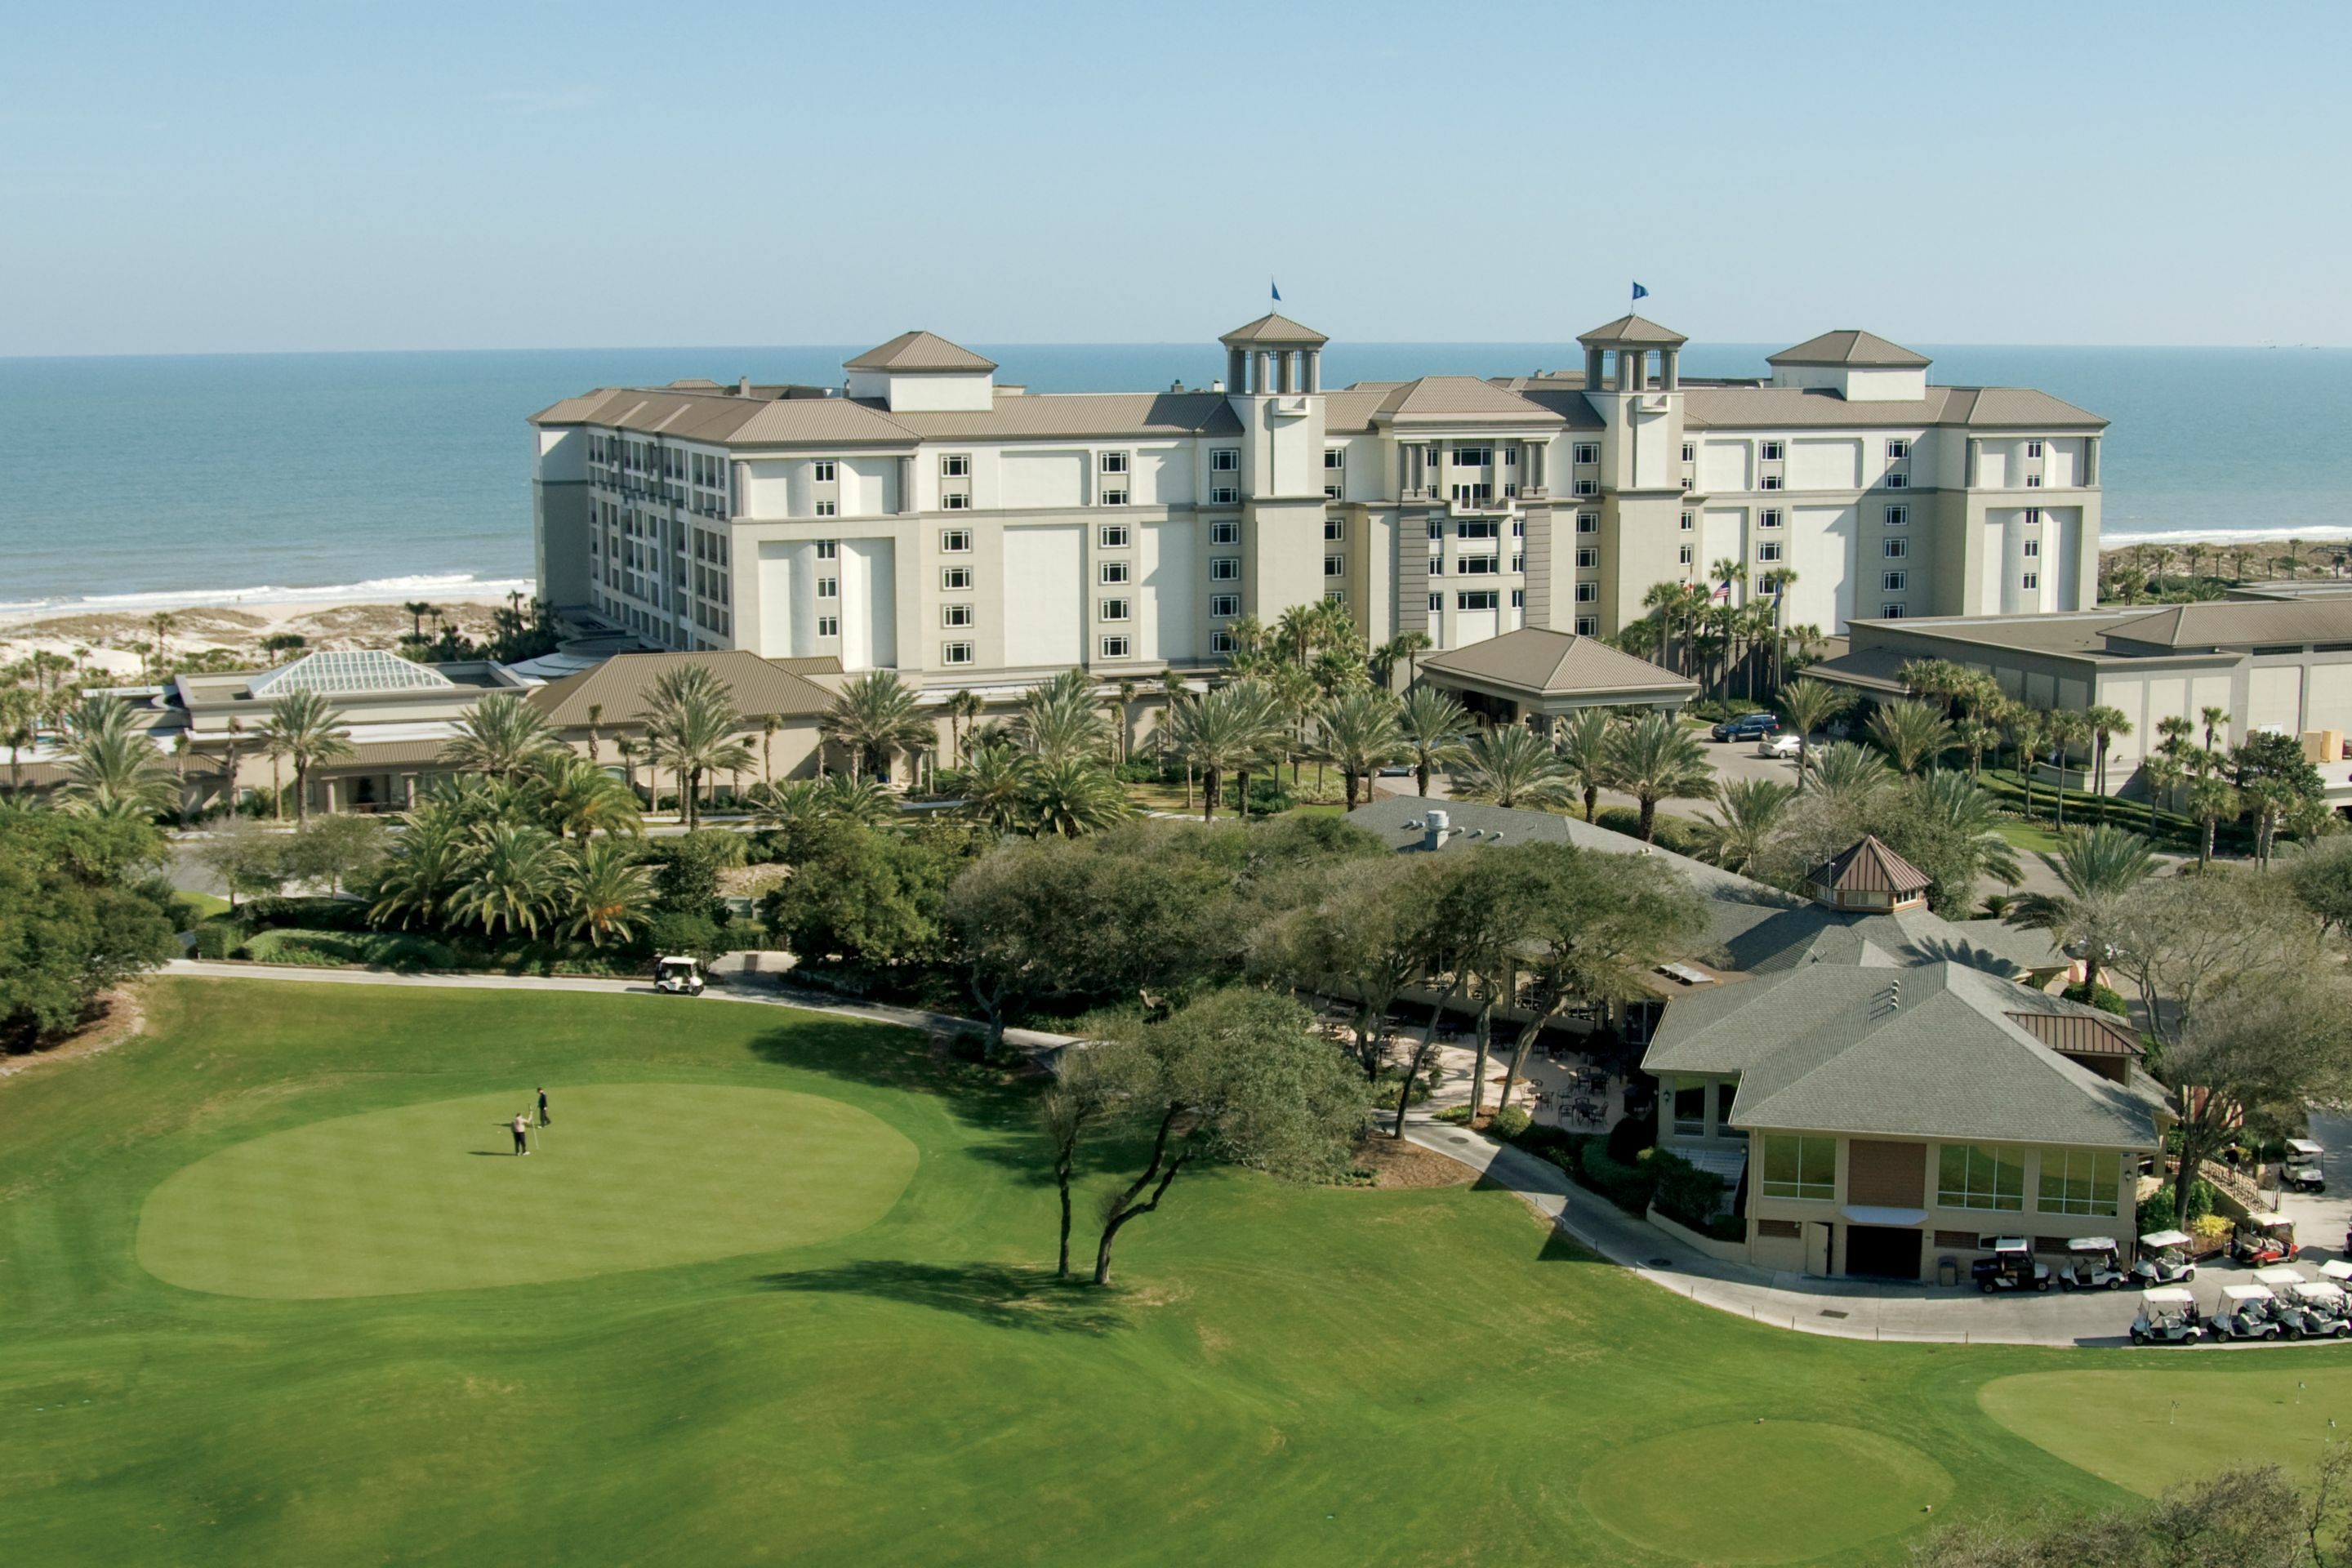 Photo of The Ritz-Carlton, Amelia Island, Fernandina Beach, FL